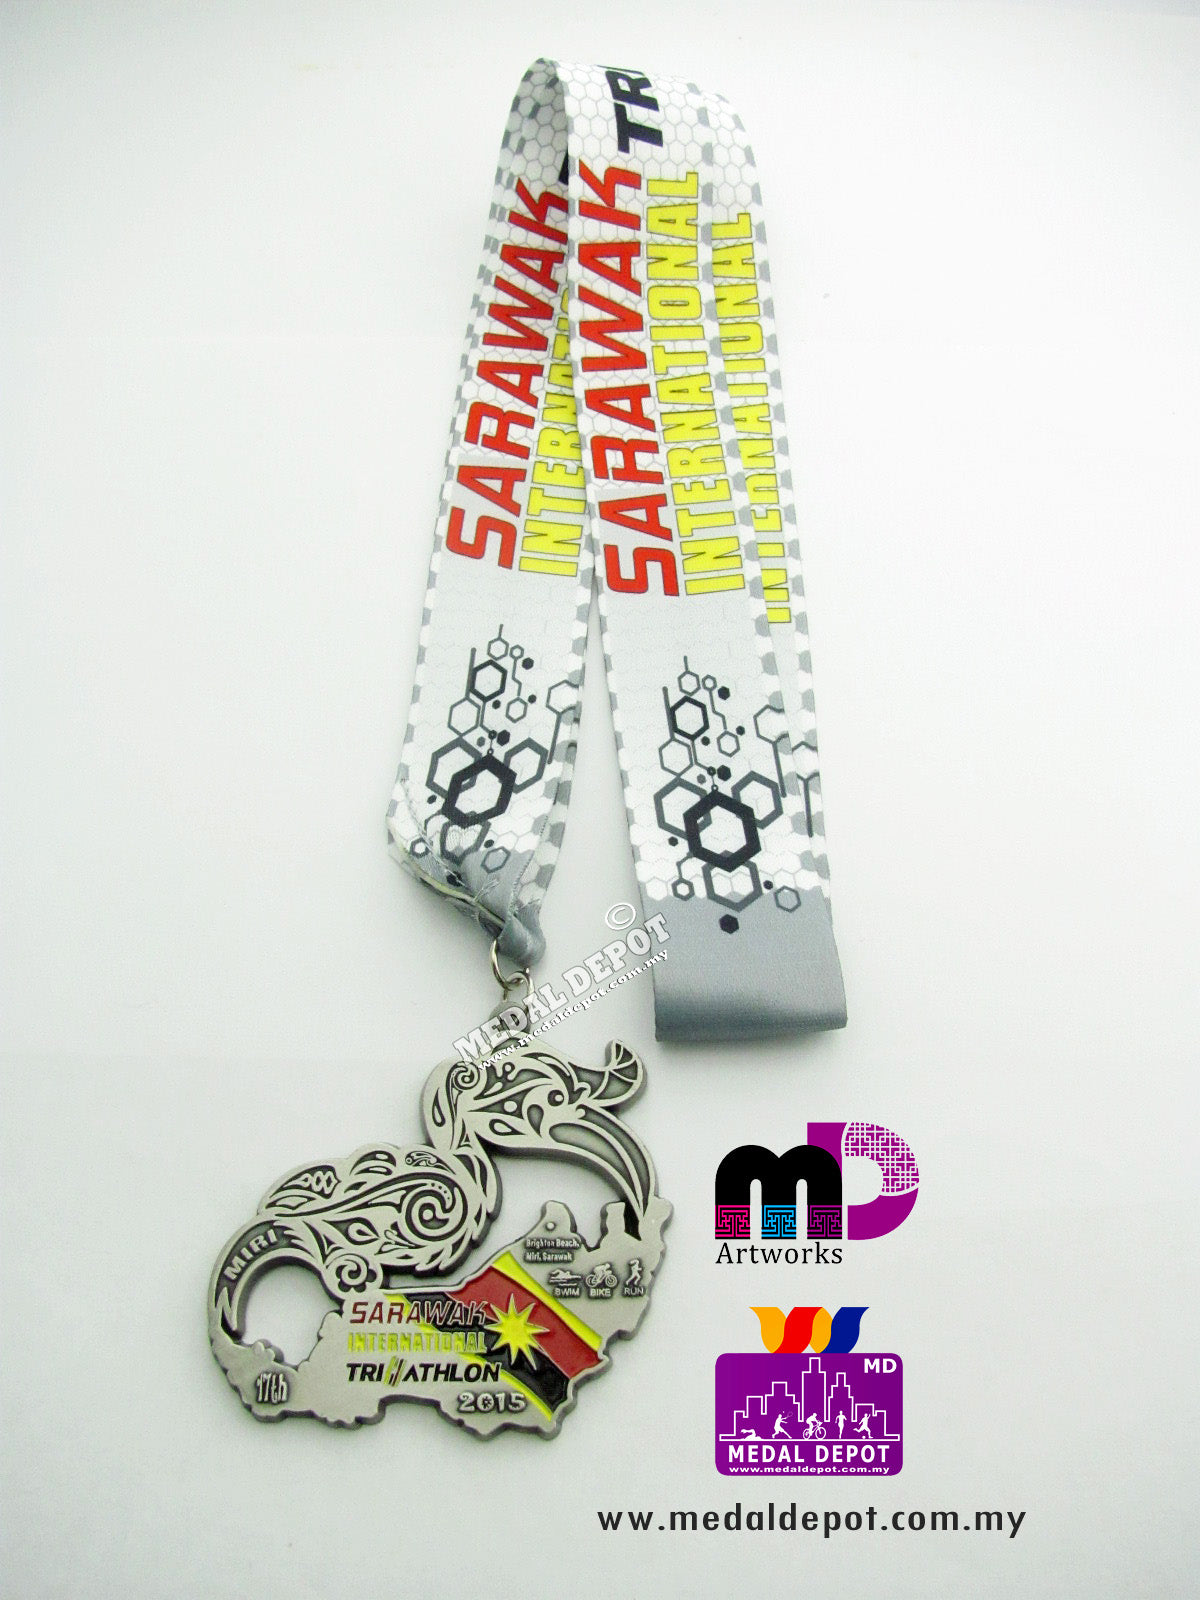 Sarawak International Triathlon 2015